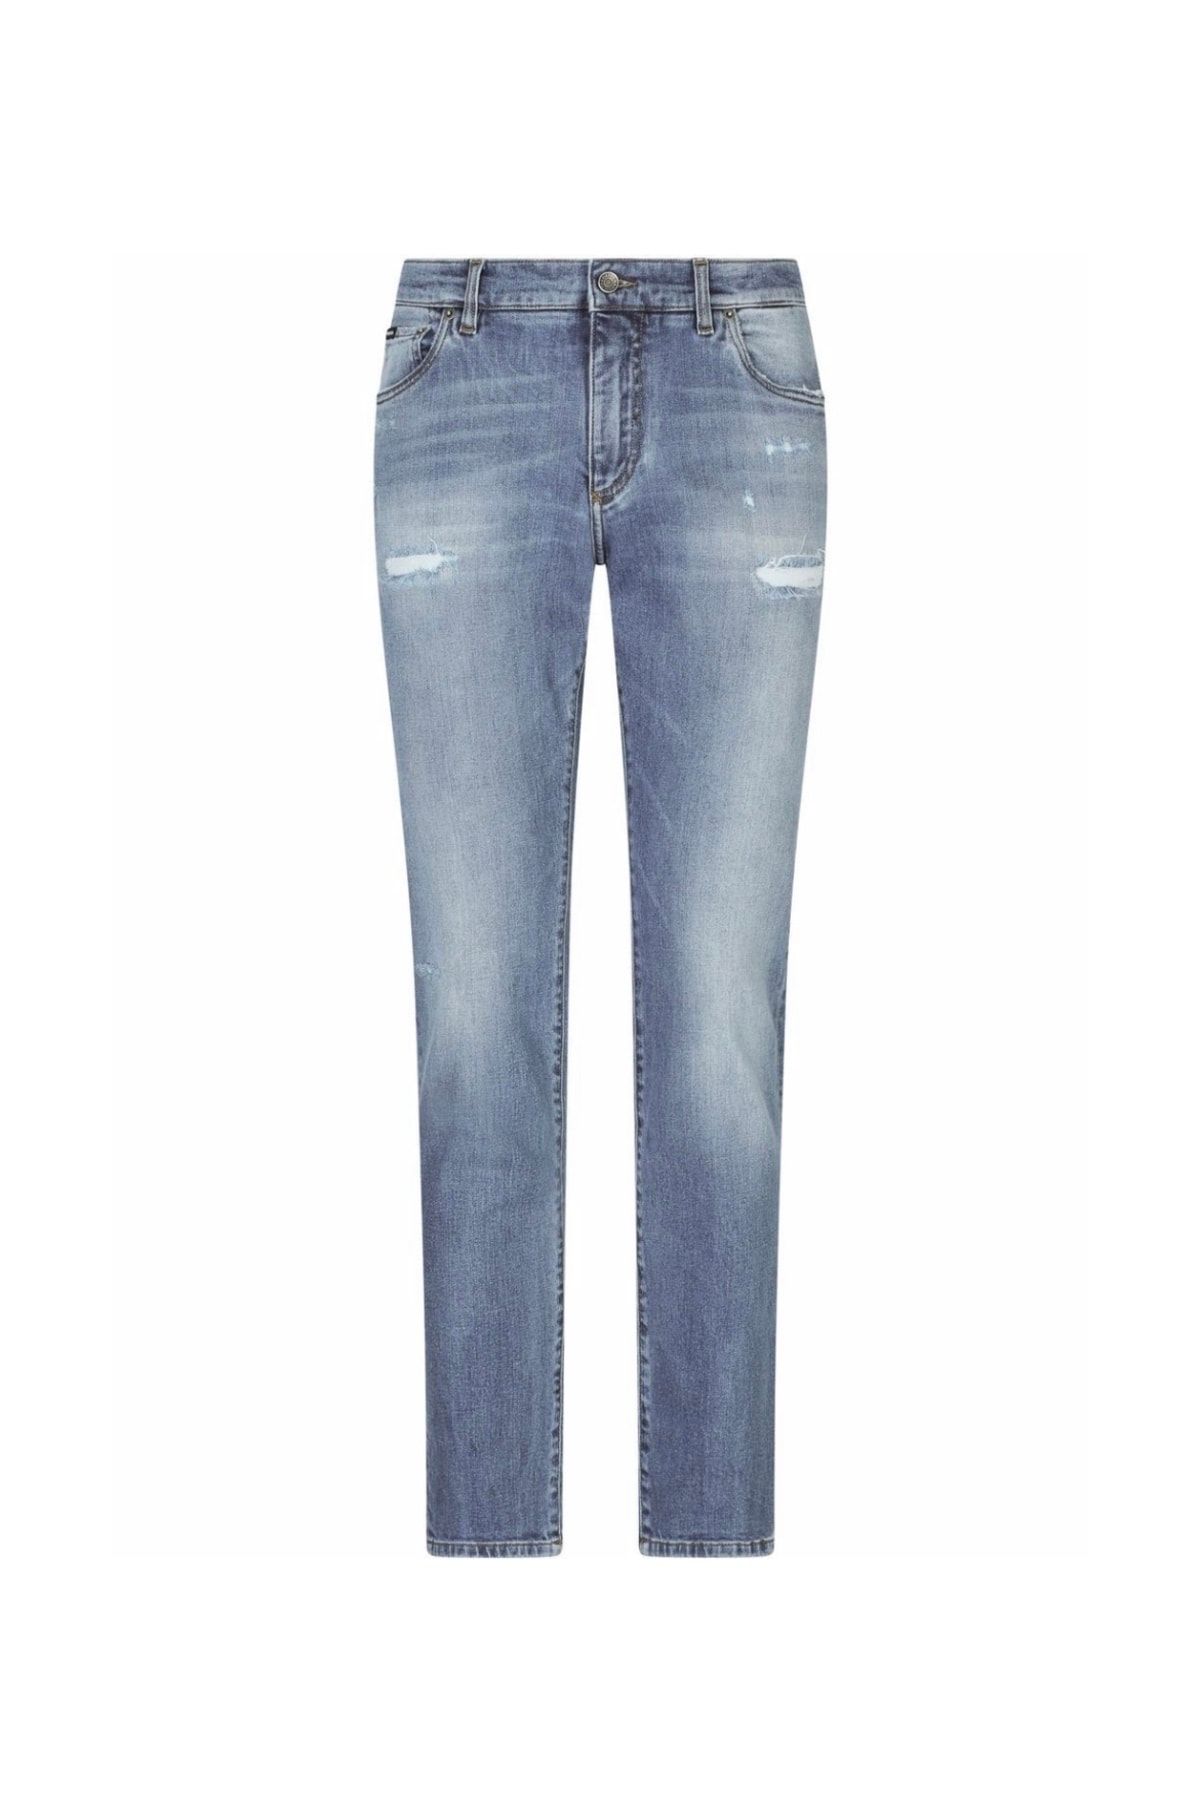 Dolce&Gabbana Light Wash Straight-leg Jeans